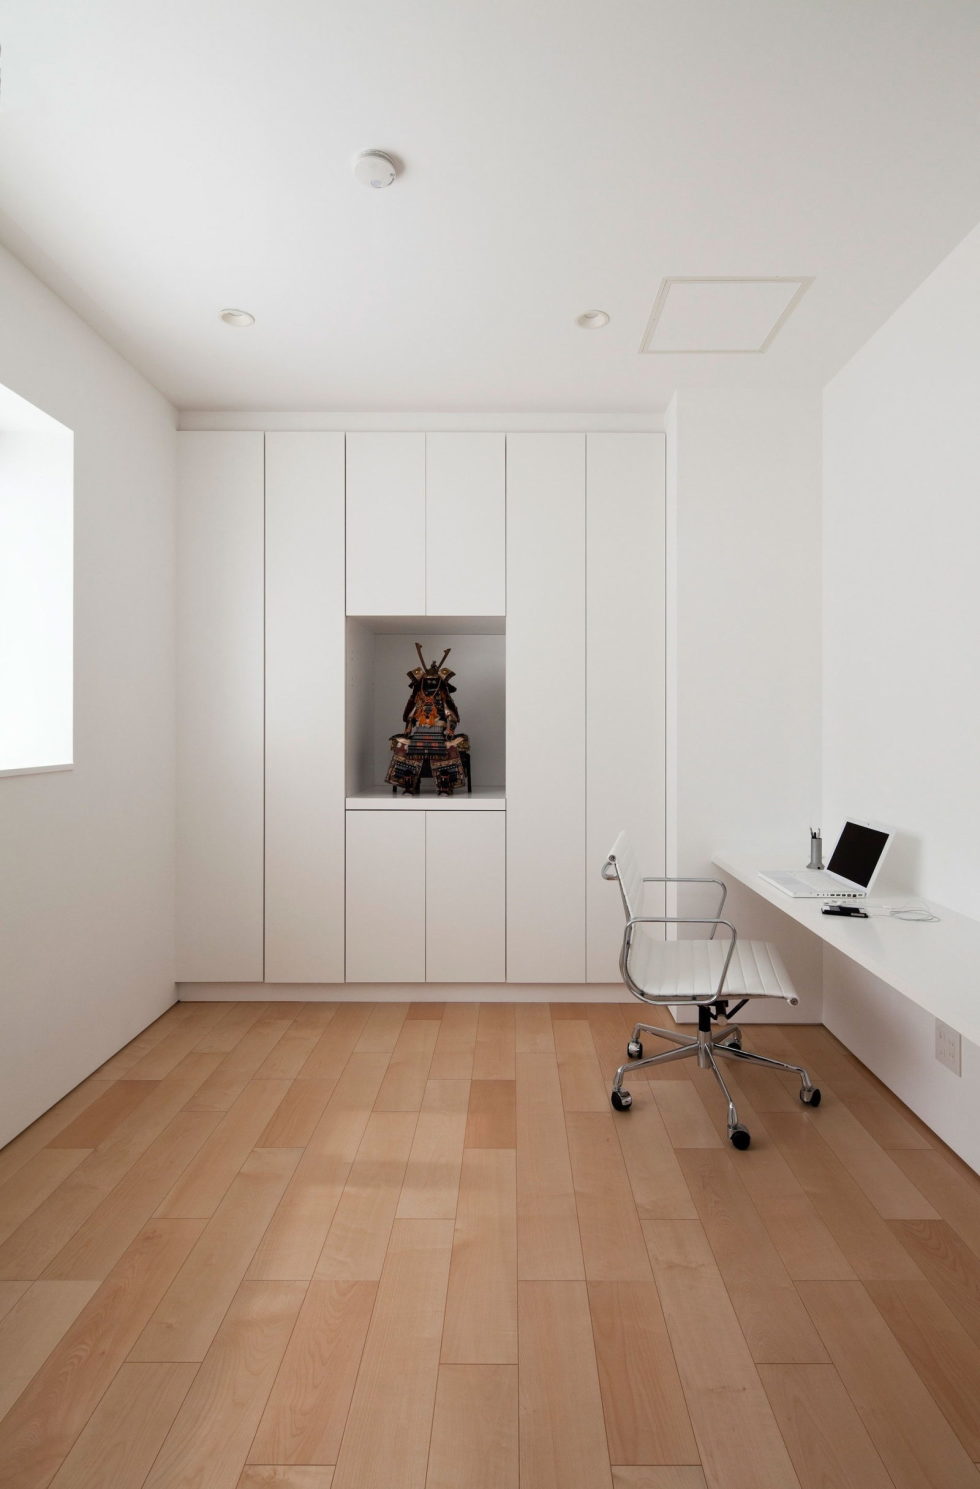 Zen Design House From RCK Design Studio In Japan 25